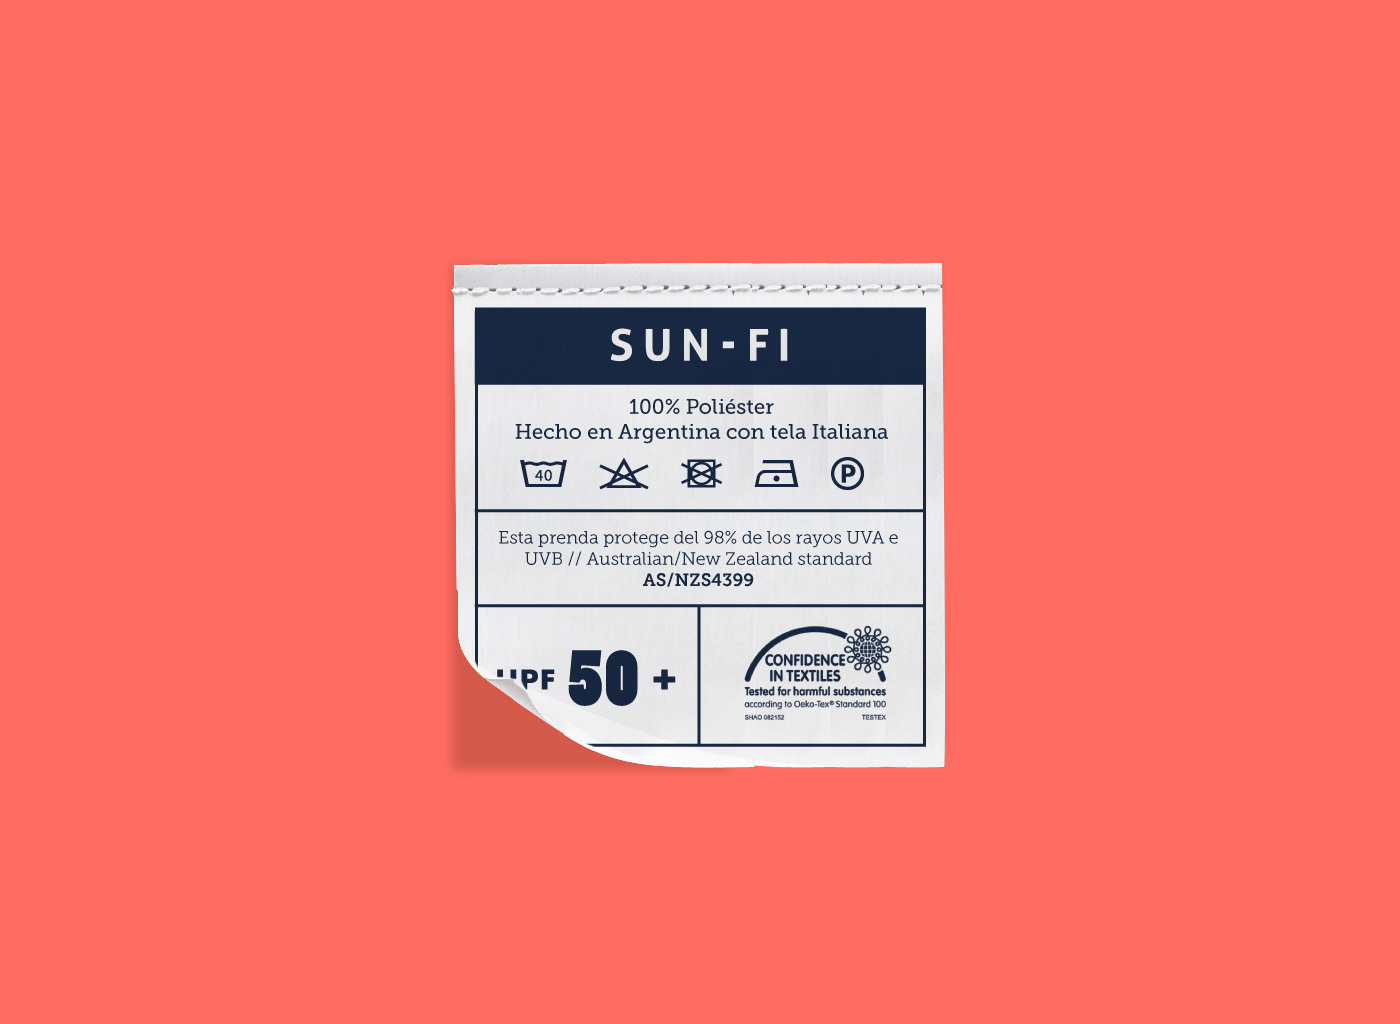 Adobe Portfolio SUN-FI U.V. sun screen sun protection bunker3022 vanya silva clothes ropa para niños kids Kids Clothes buenos aires Retail lifestyle